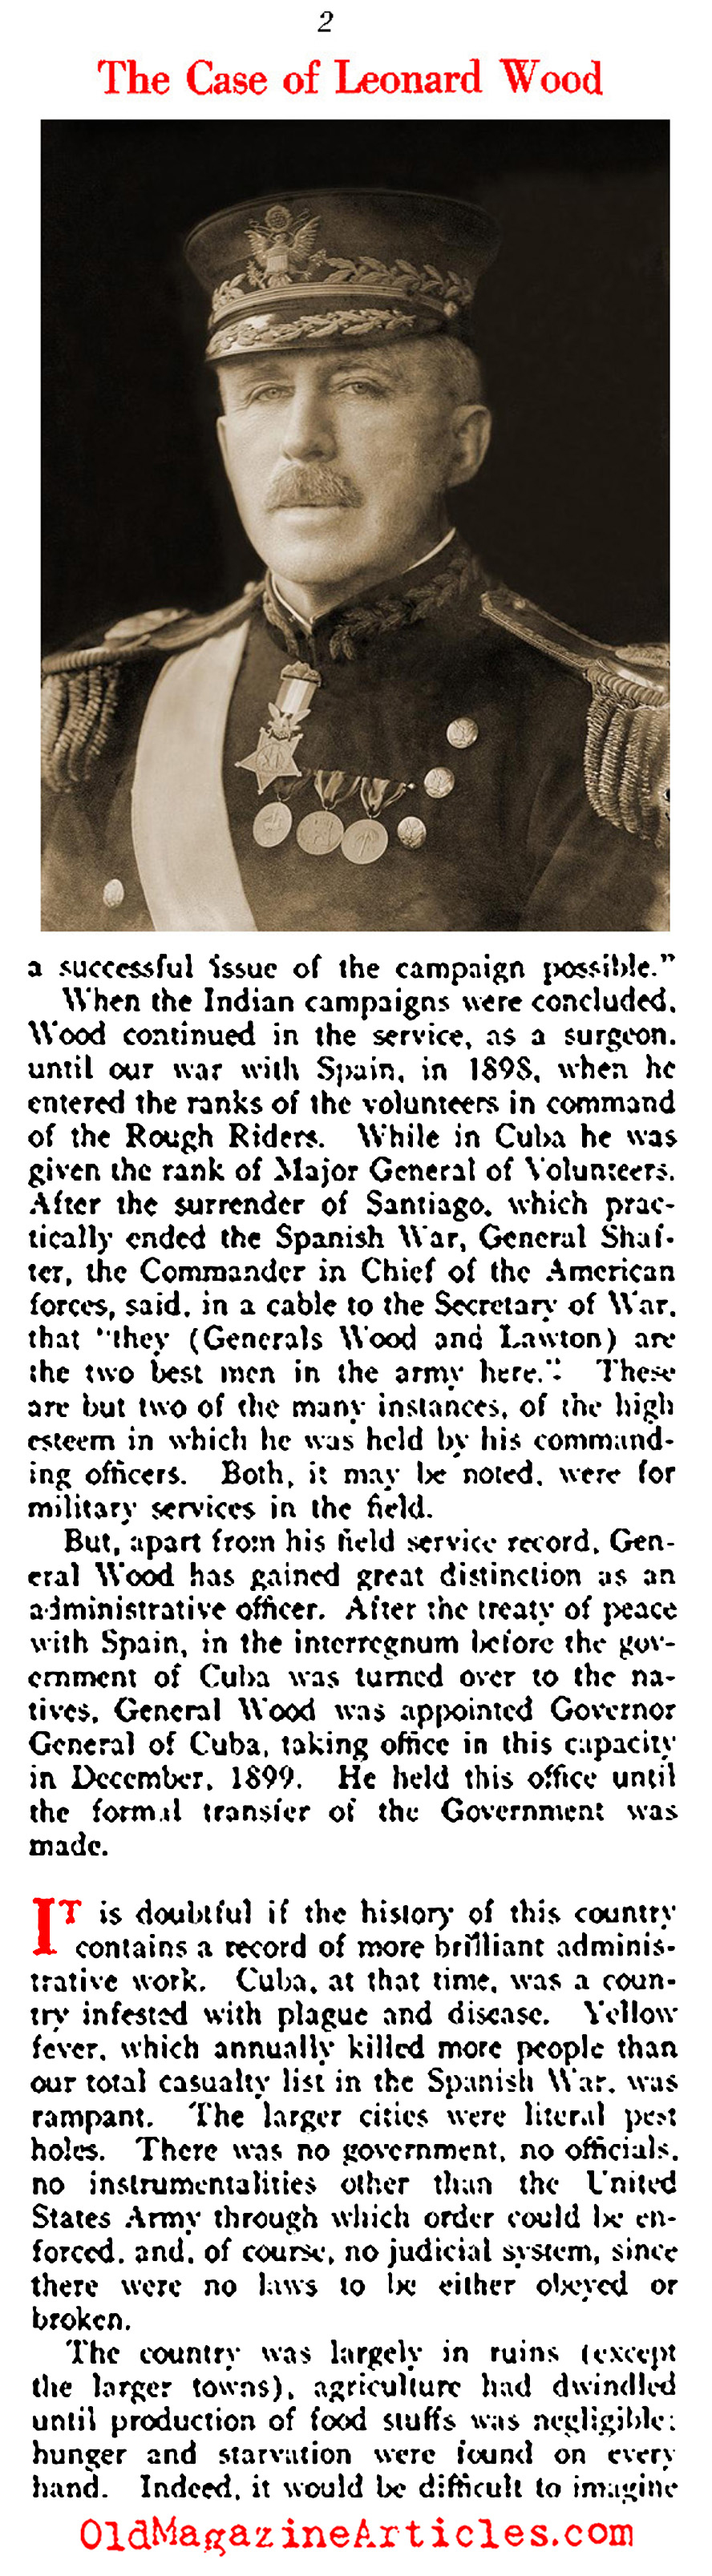 The Case for Leonard Wood (Vanity Fair Magazine, 1918)